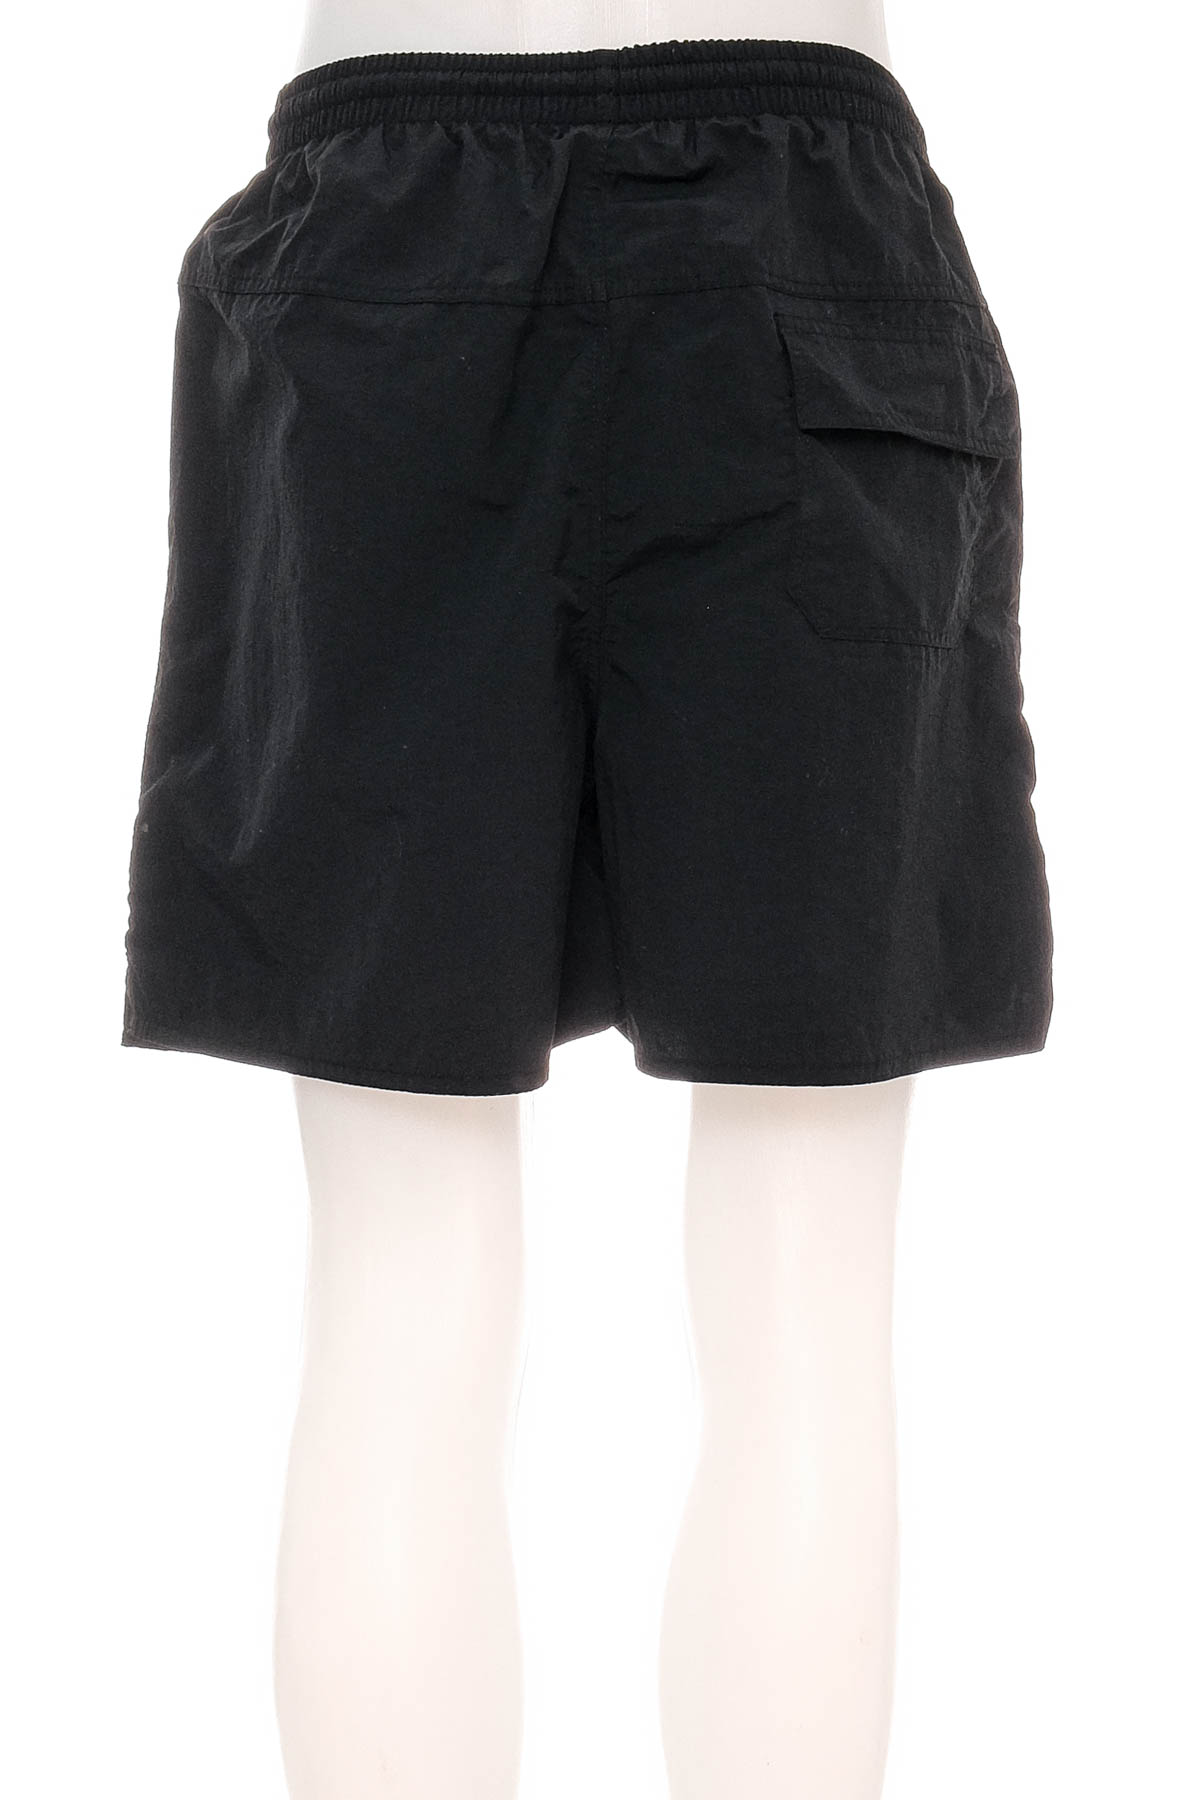 Men's shorts - Beco - 1